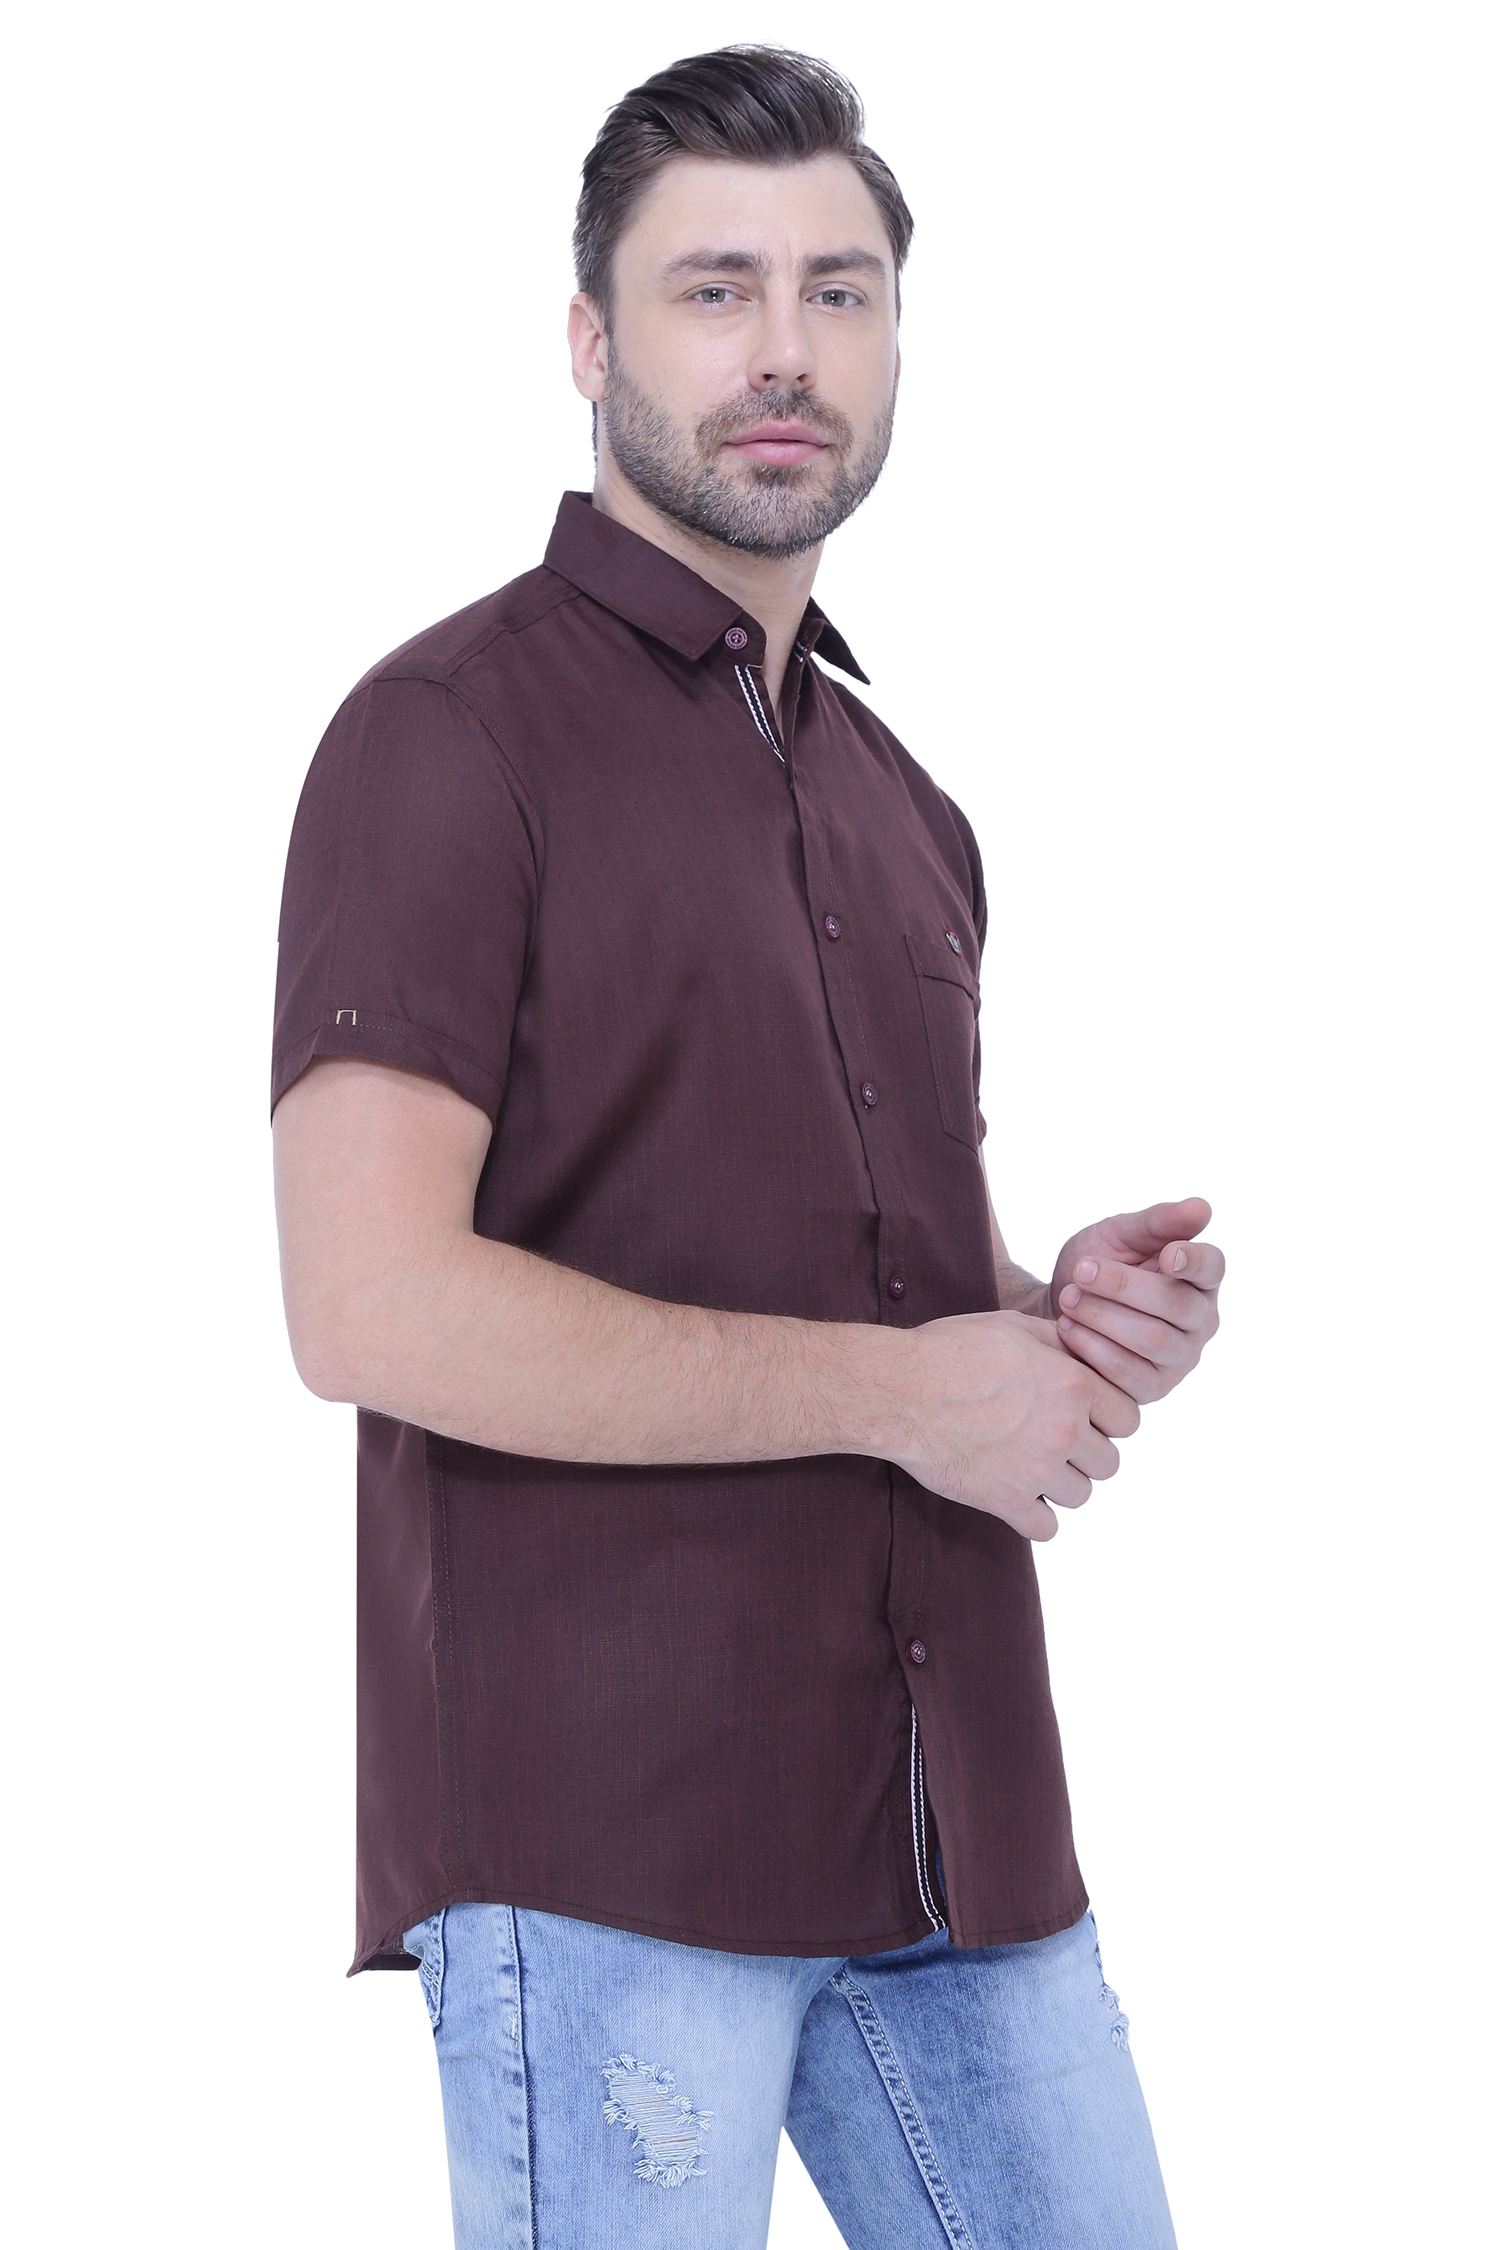 Kuons Avenue | Kuons Avenue Men's Linen Blend Half Sleeves Casual Shirt-KACLHS1240 5